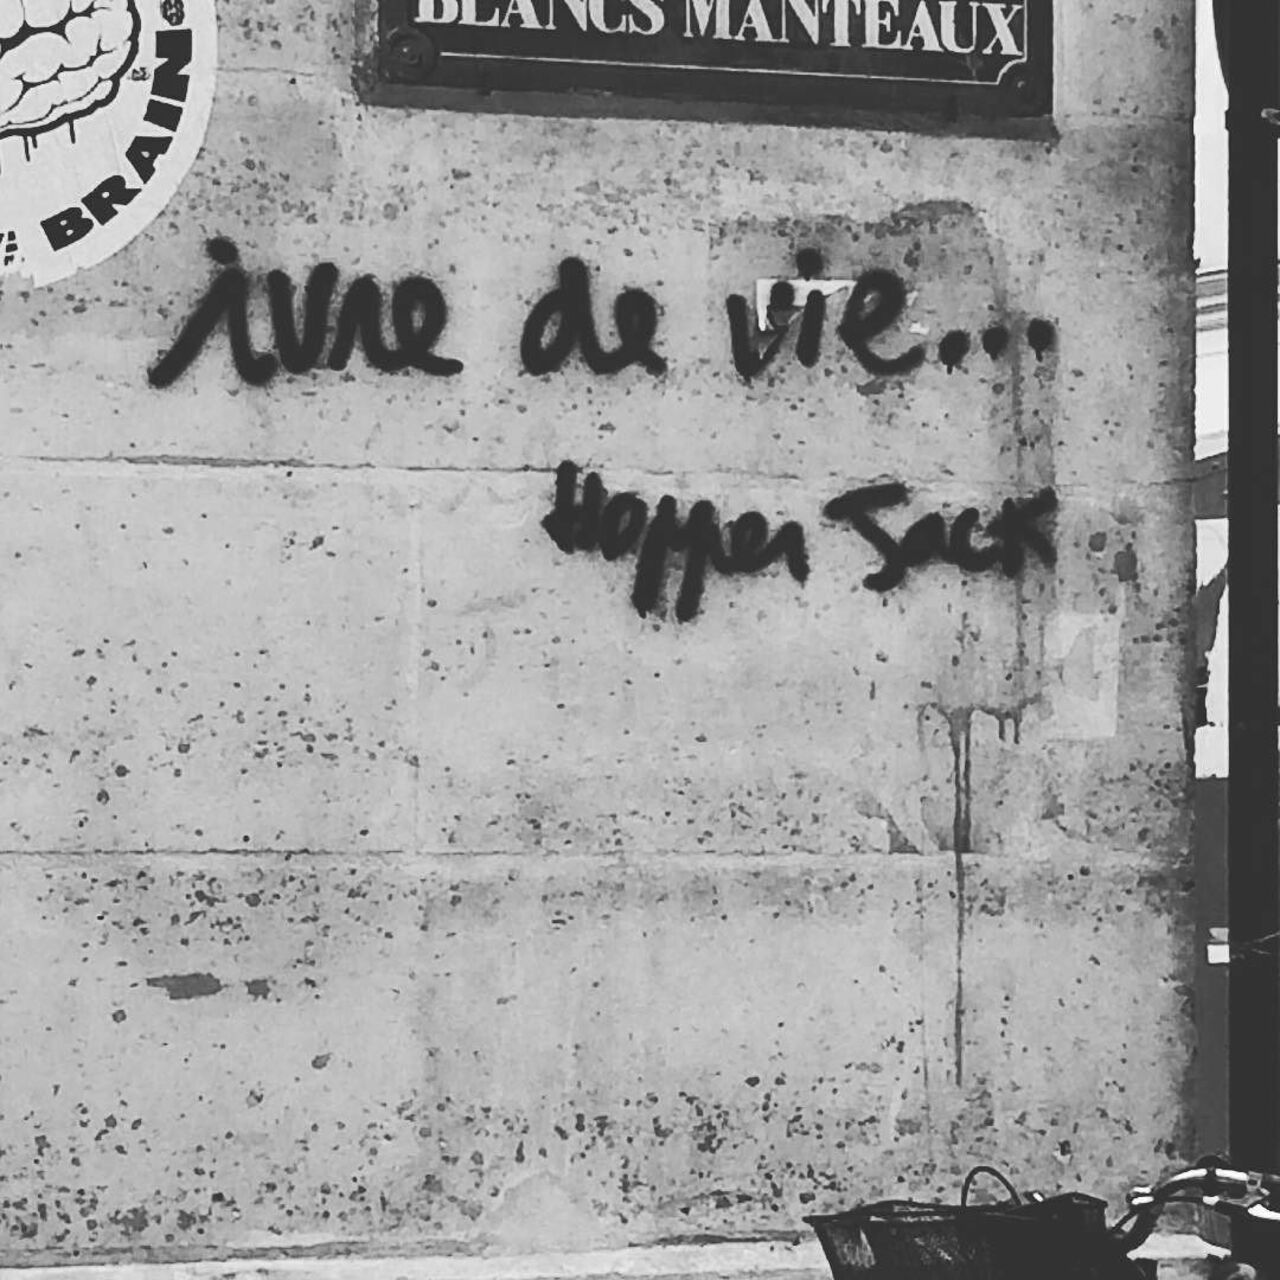 #Paris #graffiti photo by @alice.glr http://ift.tt/1PMmdNq #StreetArt https://t.co/pGPhY4rpJj